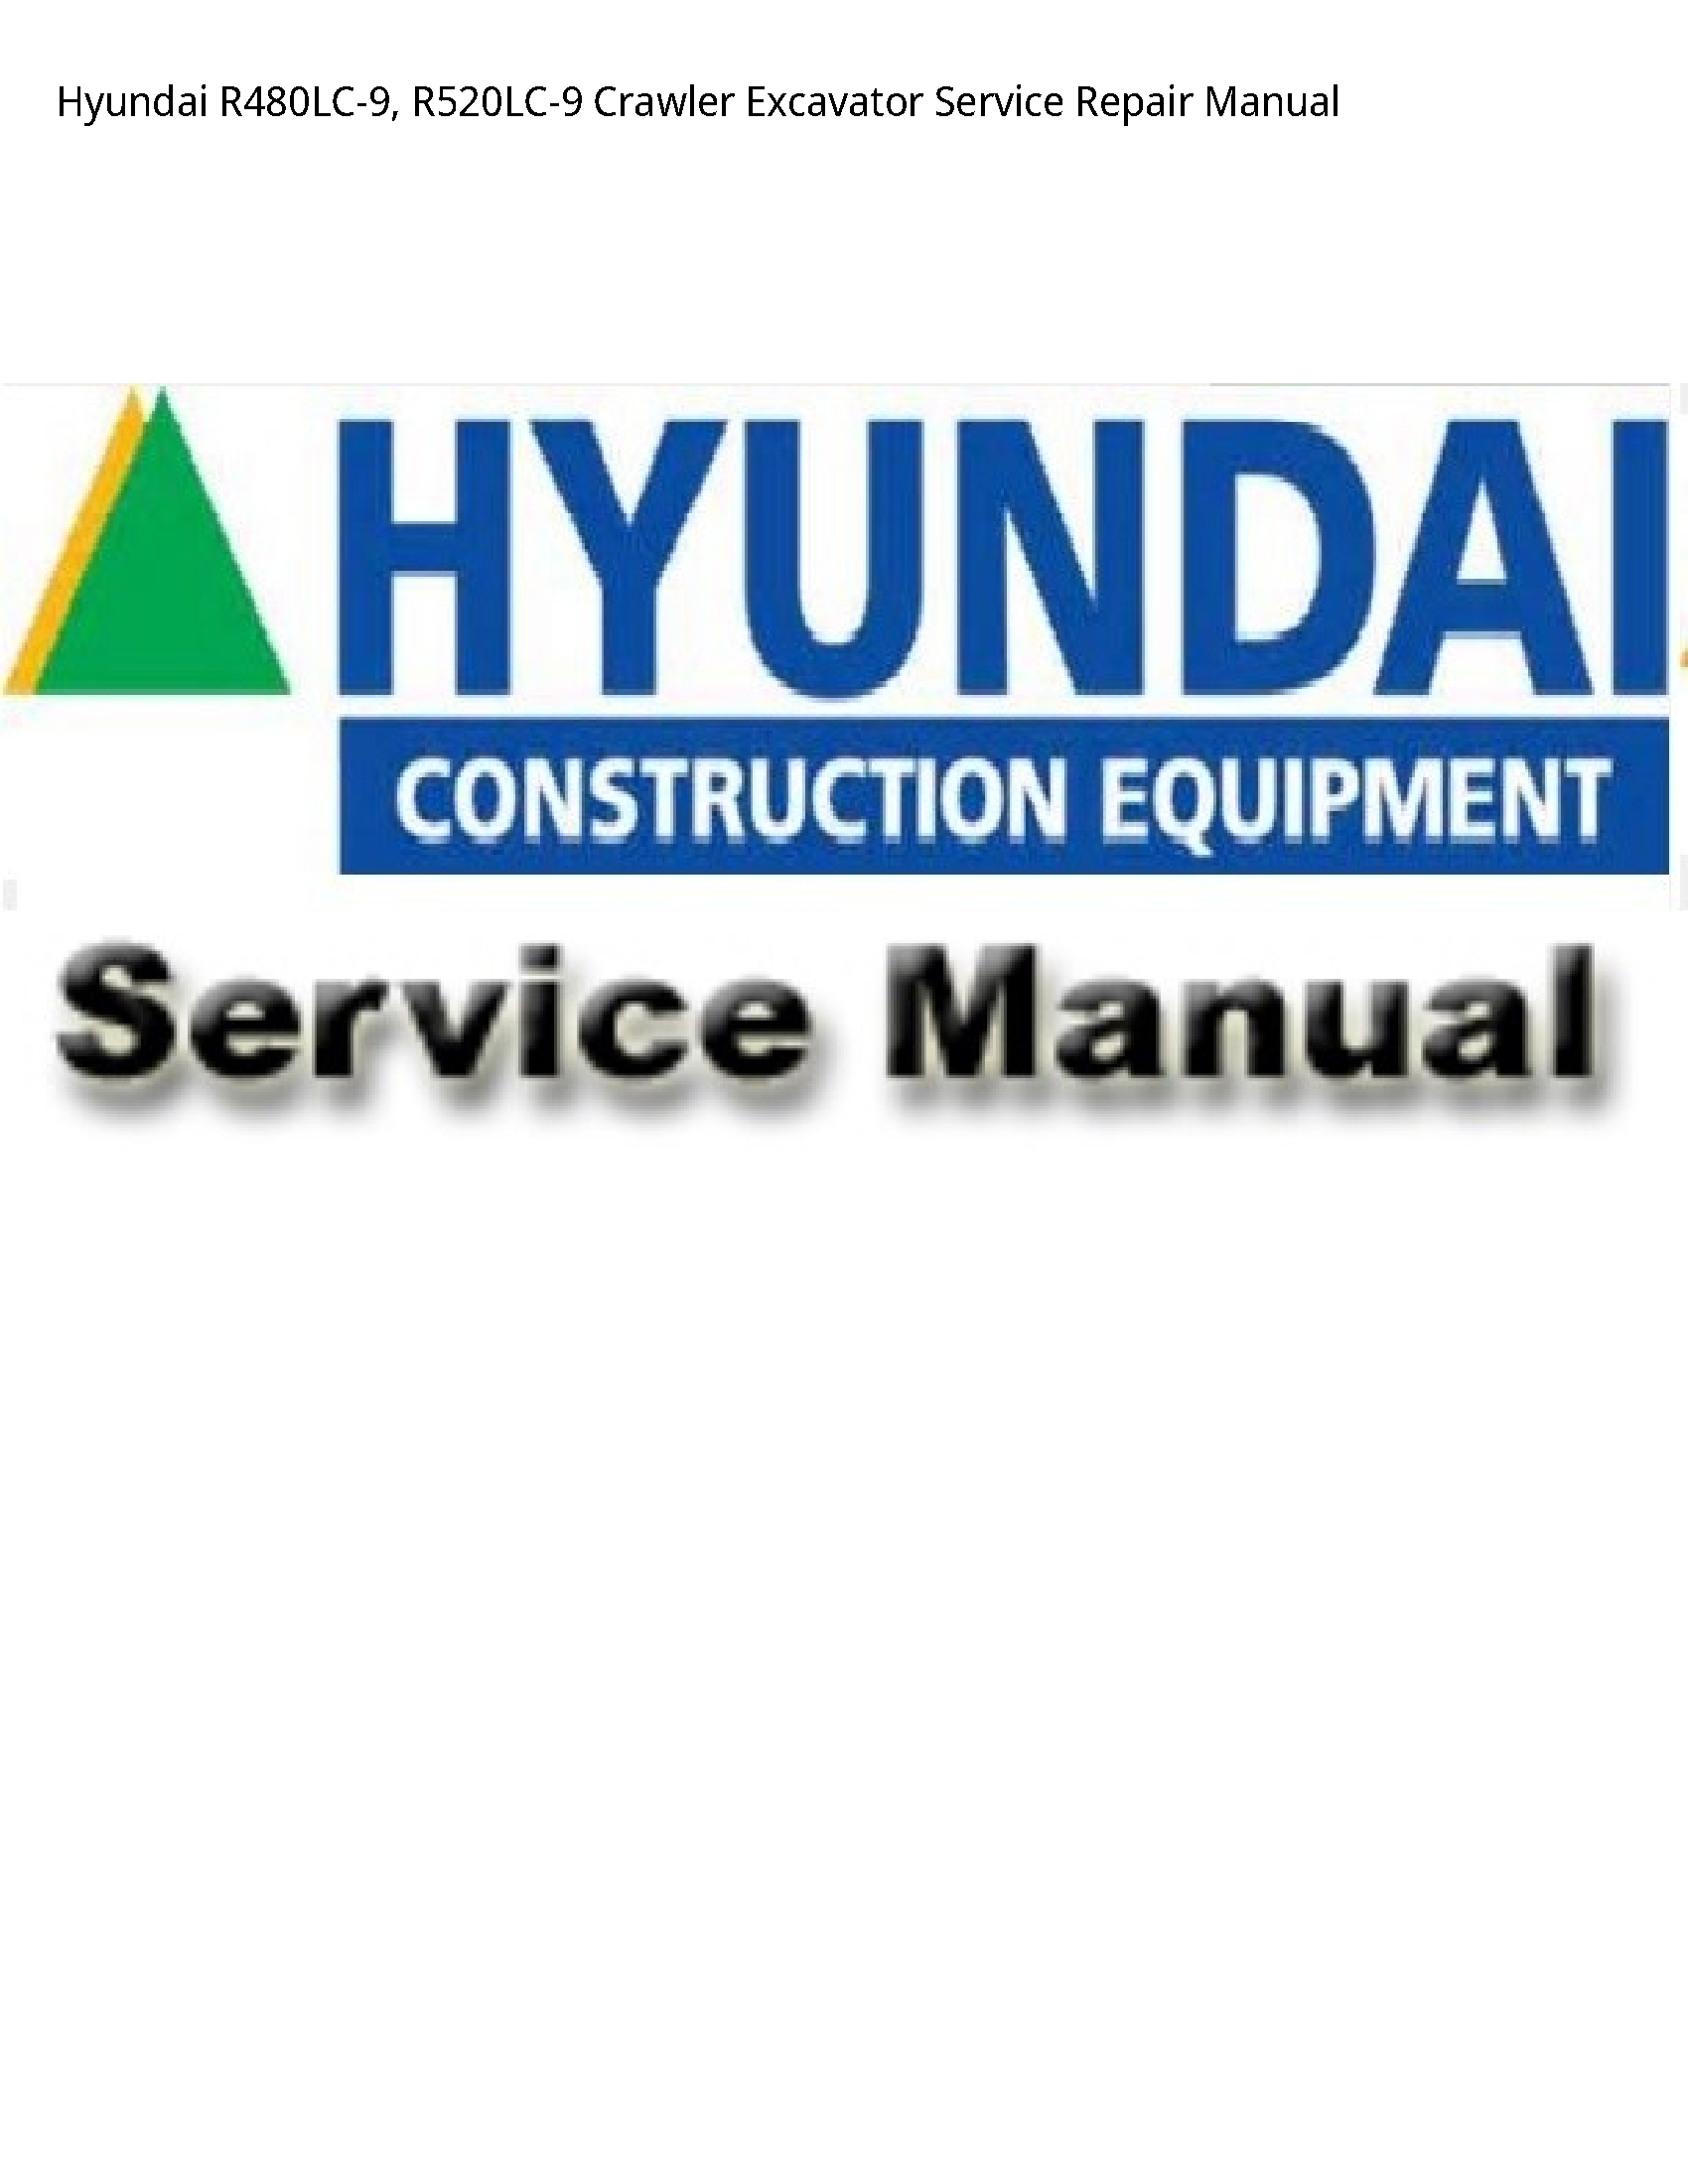 Hyundai R480LC-9 Crawler Excavator manual